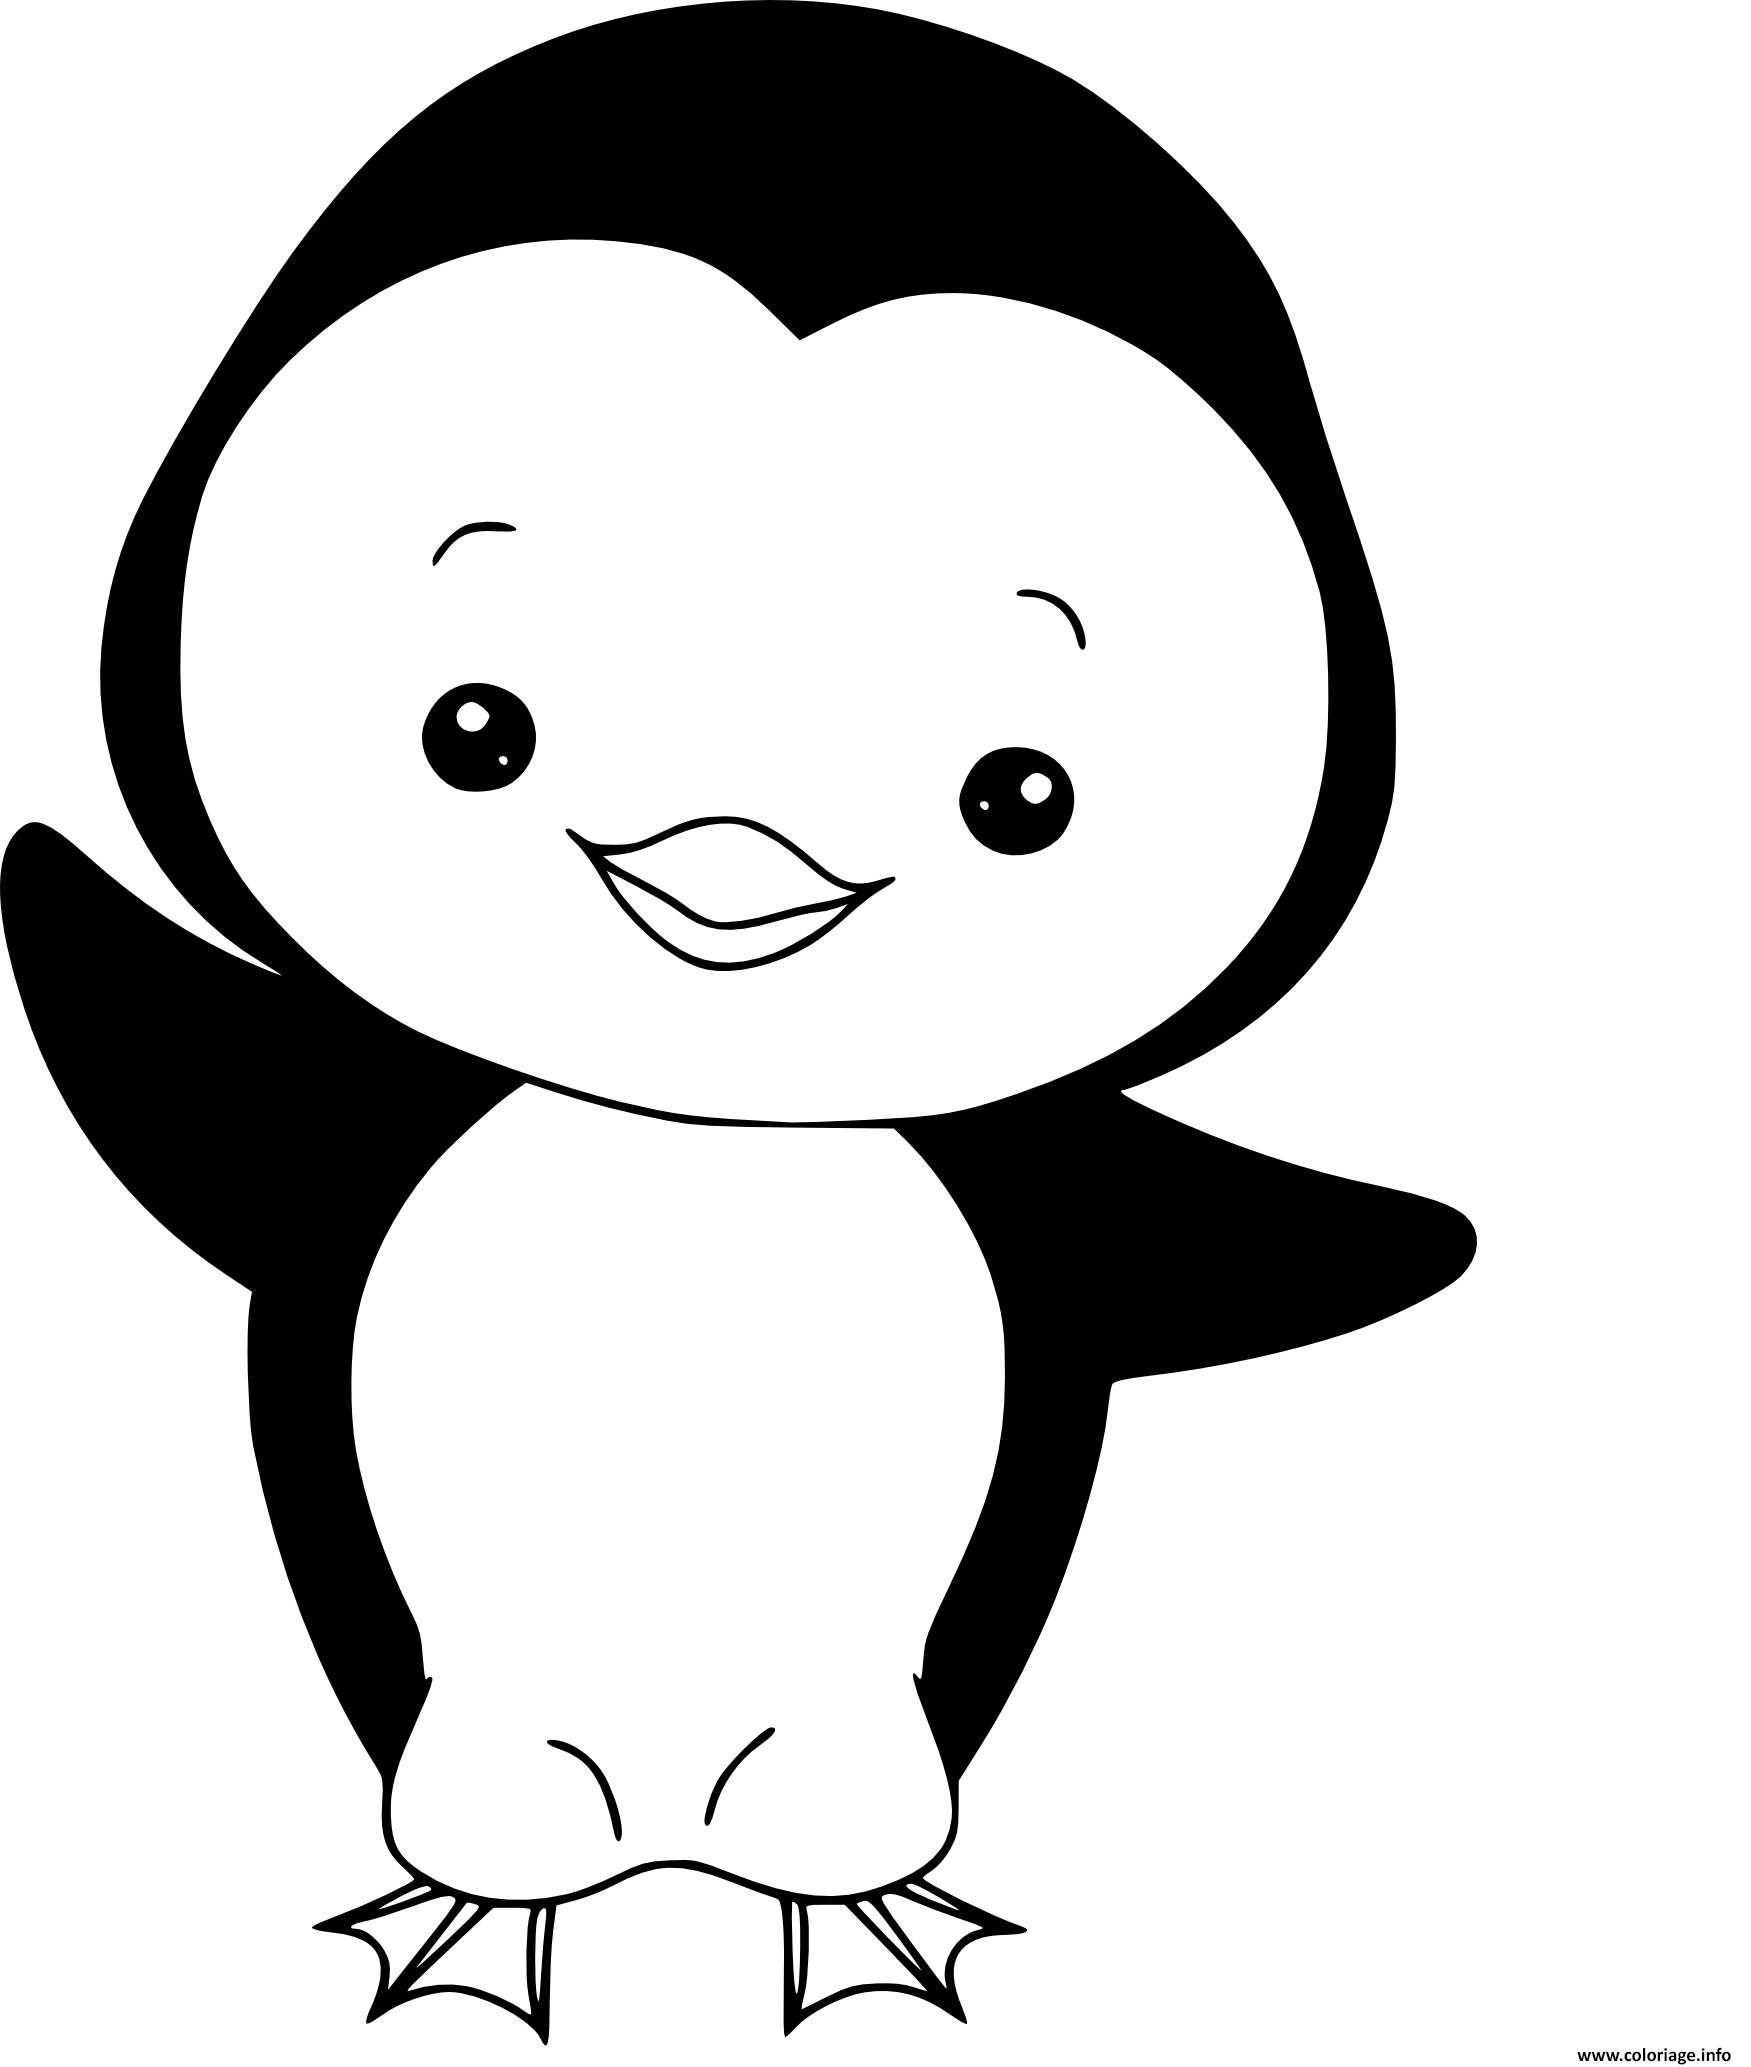 Dessin pingouin facile Coloriage Gratuit à Imprimer